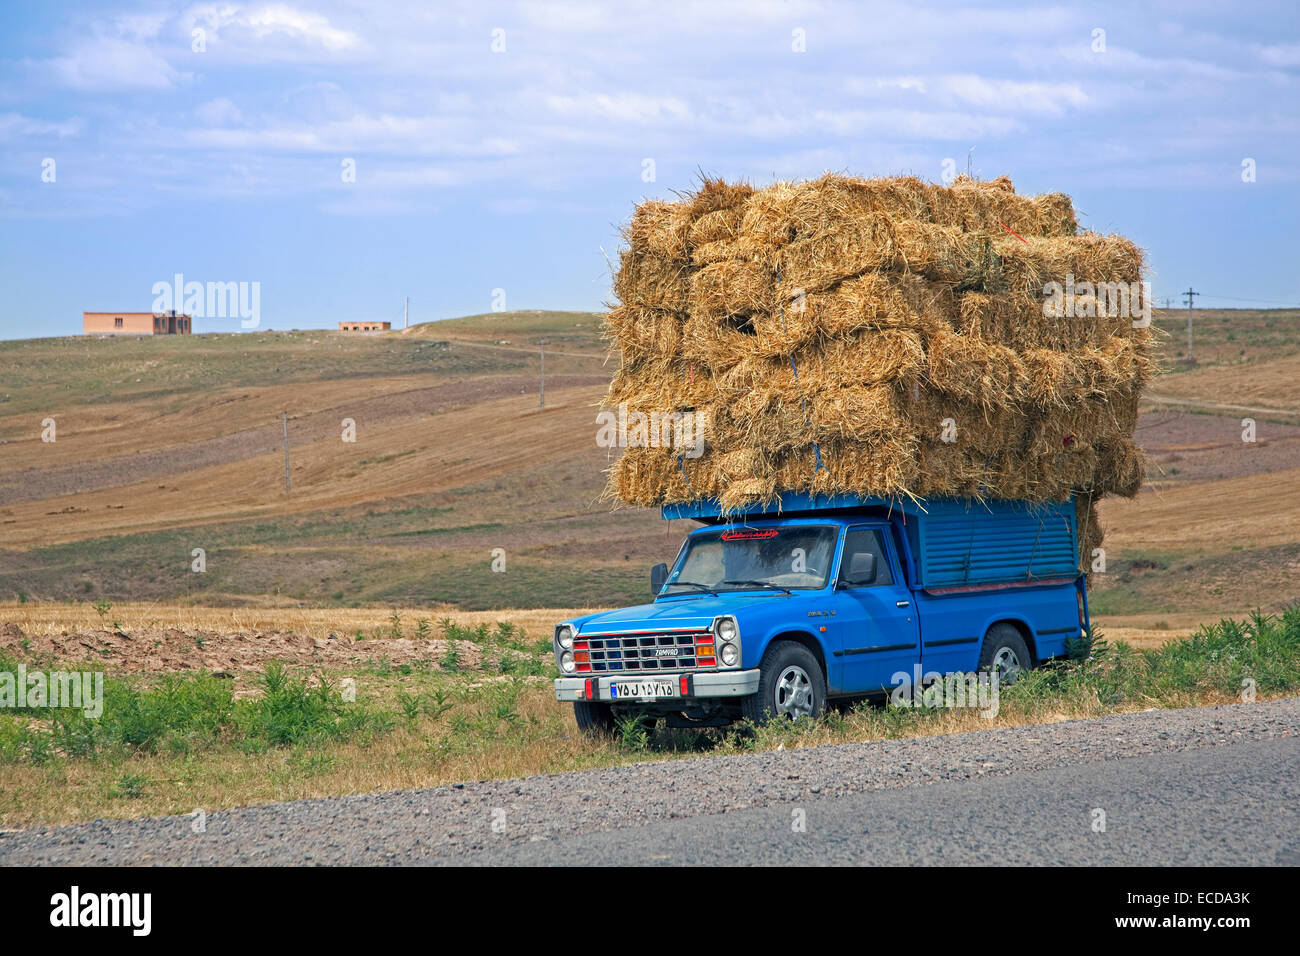 Camioneta azul pesadamente cargado con balas de heno en las zonas rurales de Irán Foto de stock